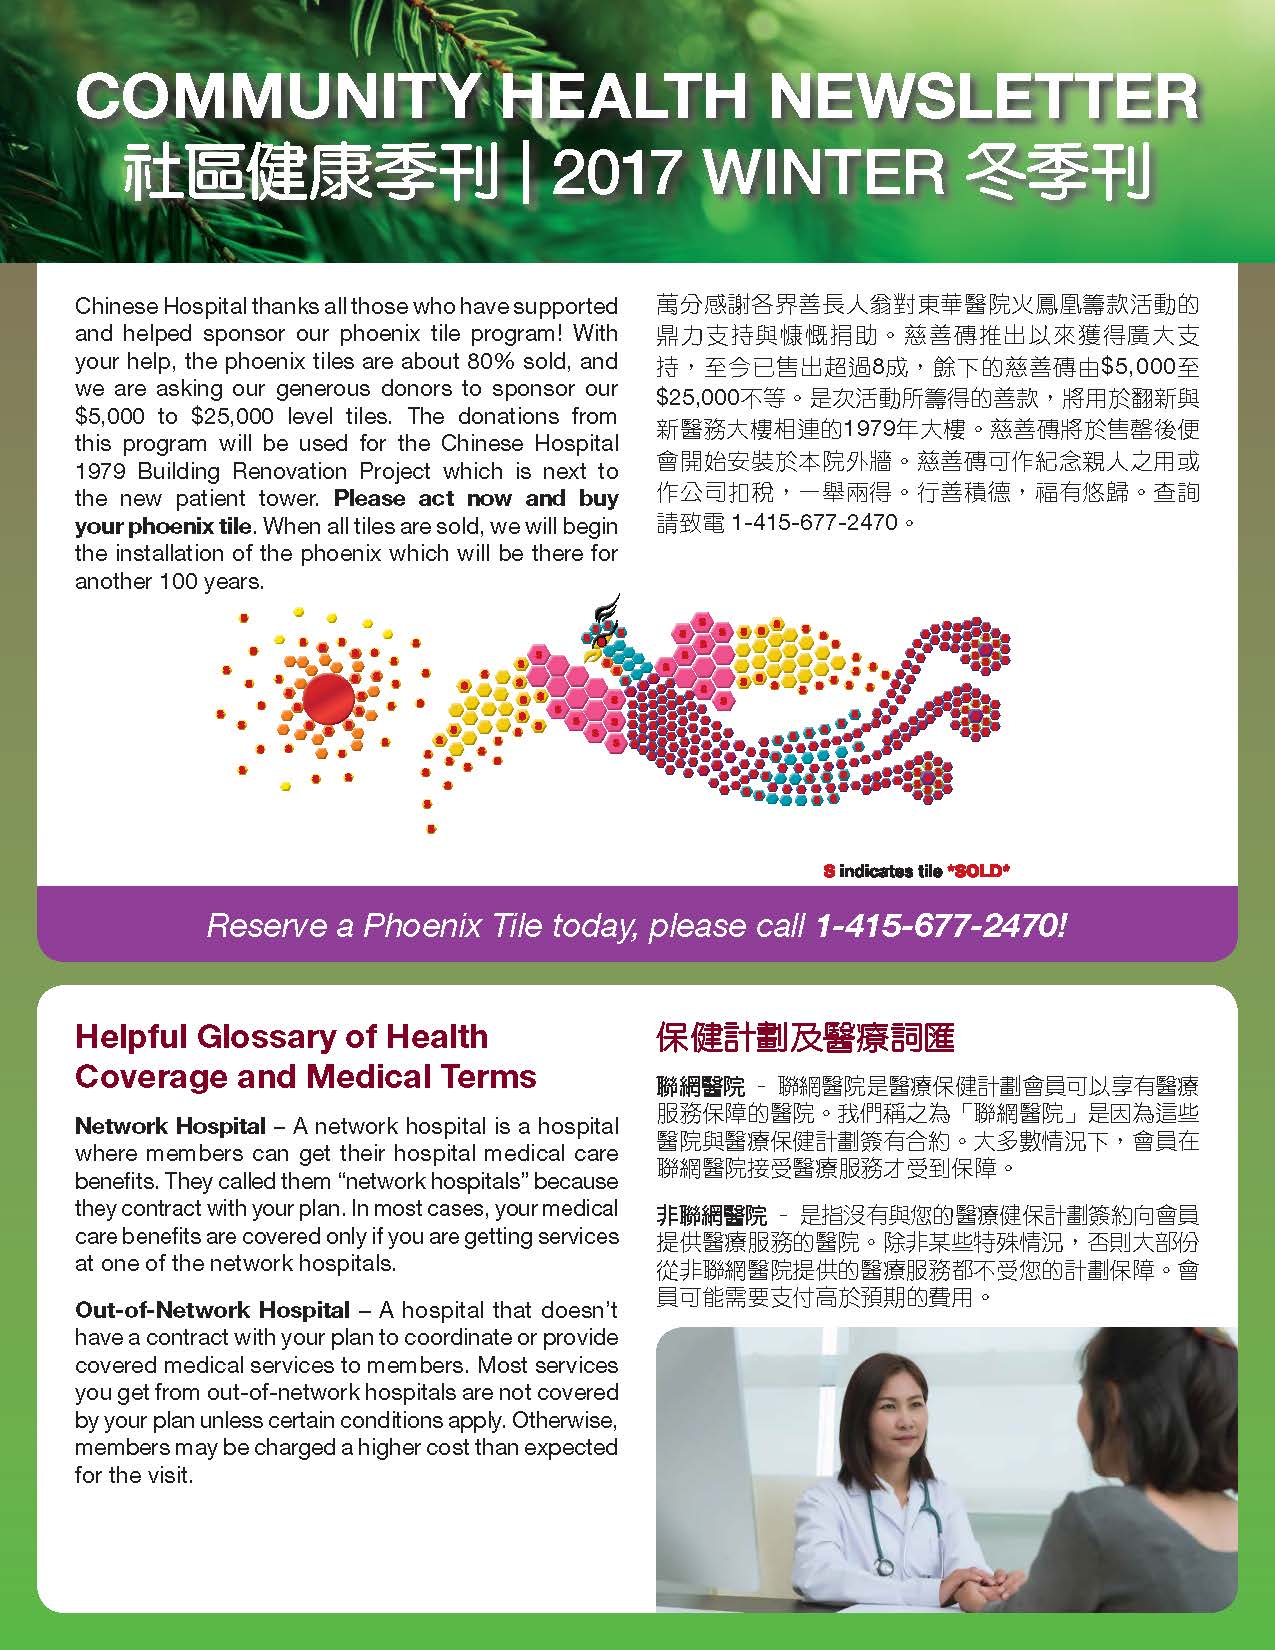 CCHP 2017 winter newsletter, information of Chinese Hospiatl